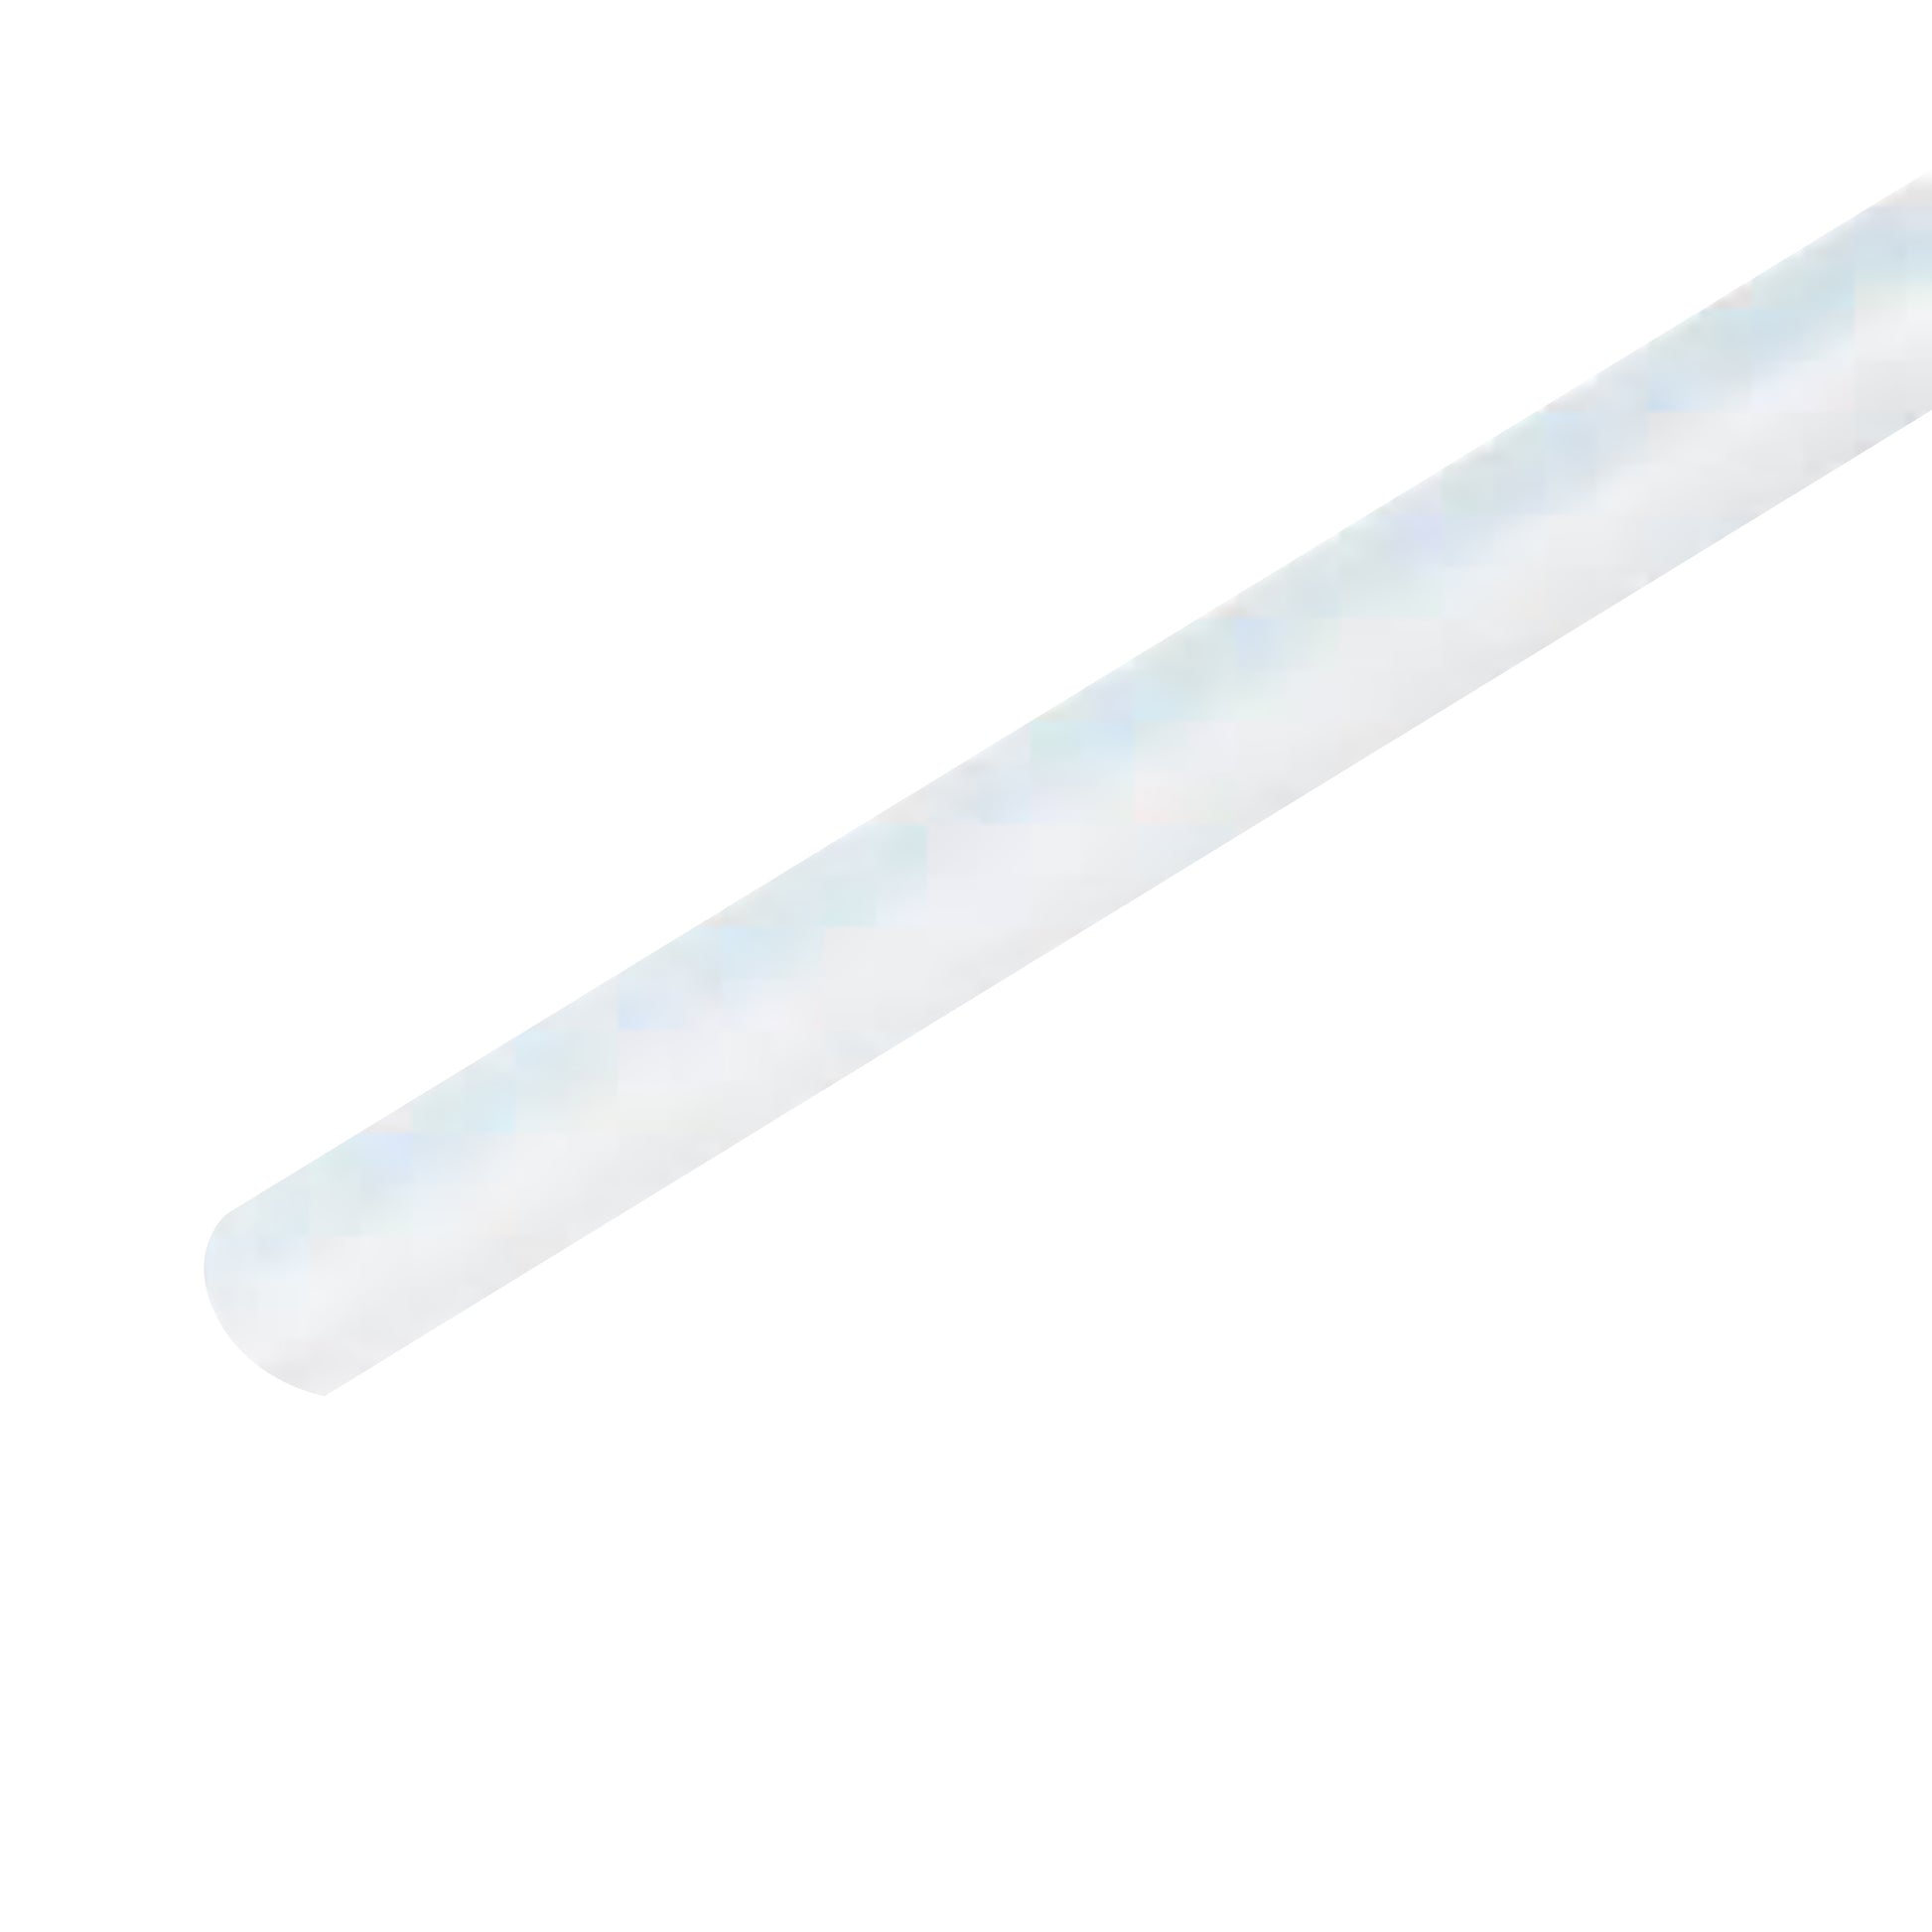 Flexible Thin Single Wall Non-Adhesive Heat Shrink Tubing 2:1 Clear 3/8" ID - 25' Ft Spool